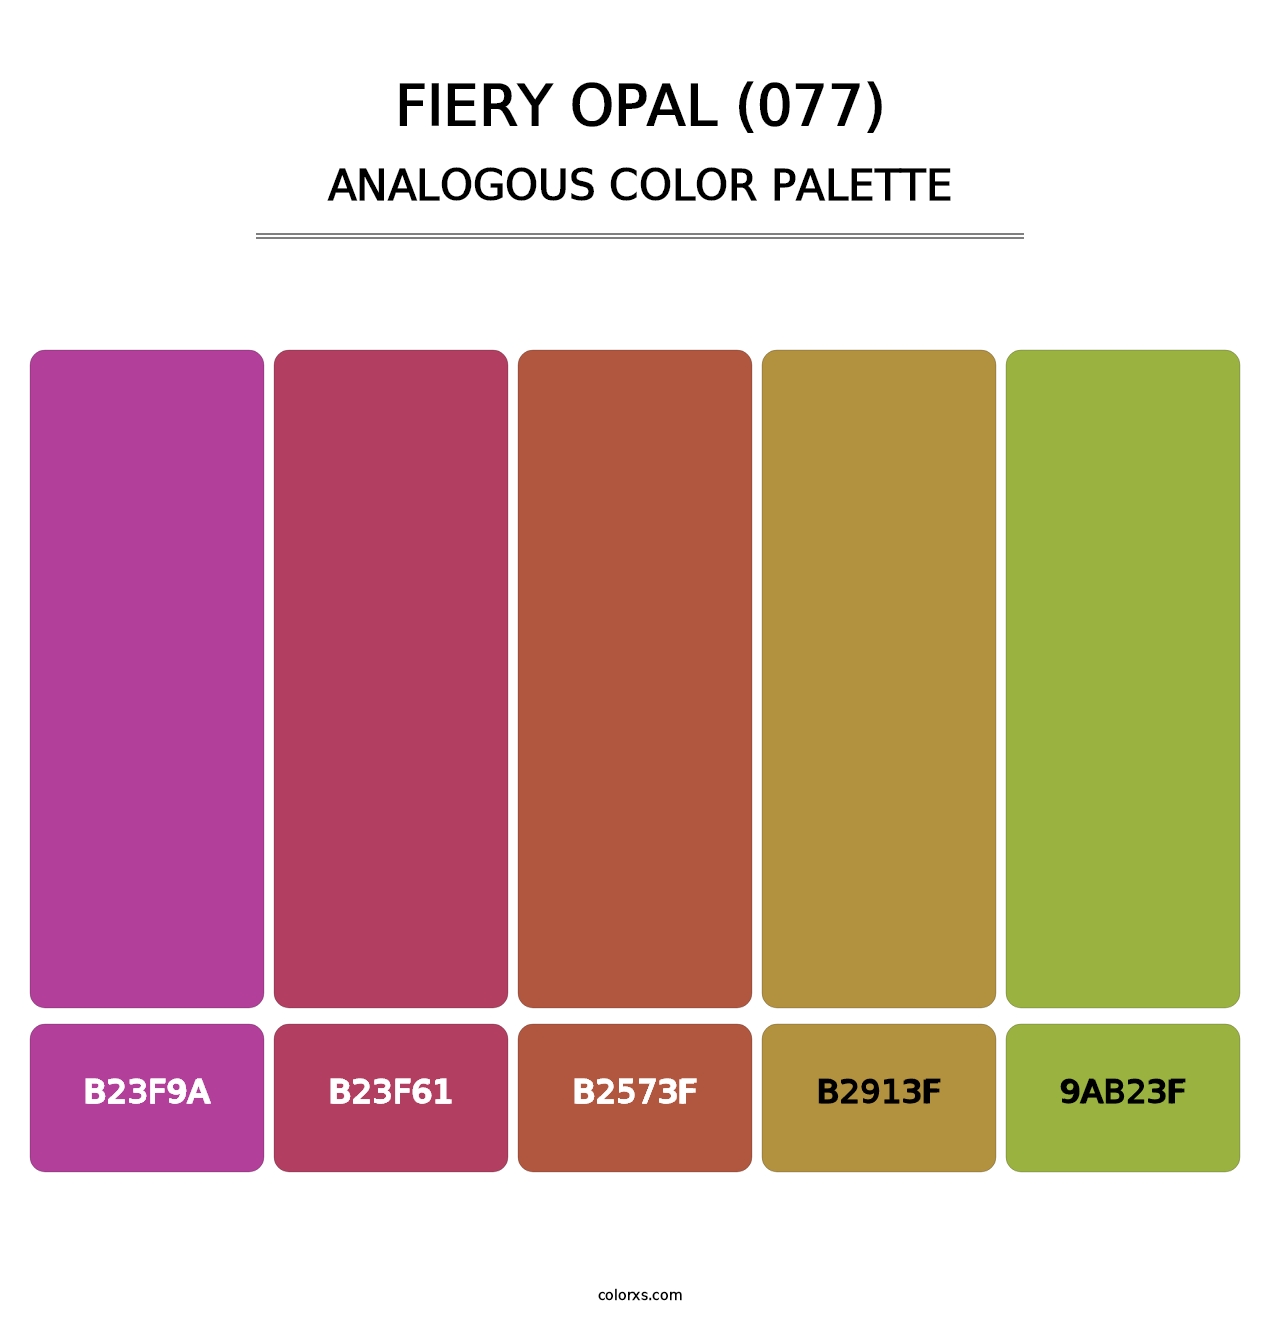 Fiery Opal (077) - Analogous Color Palette